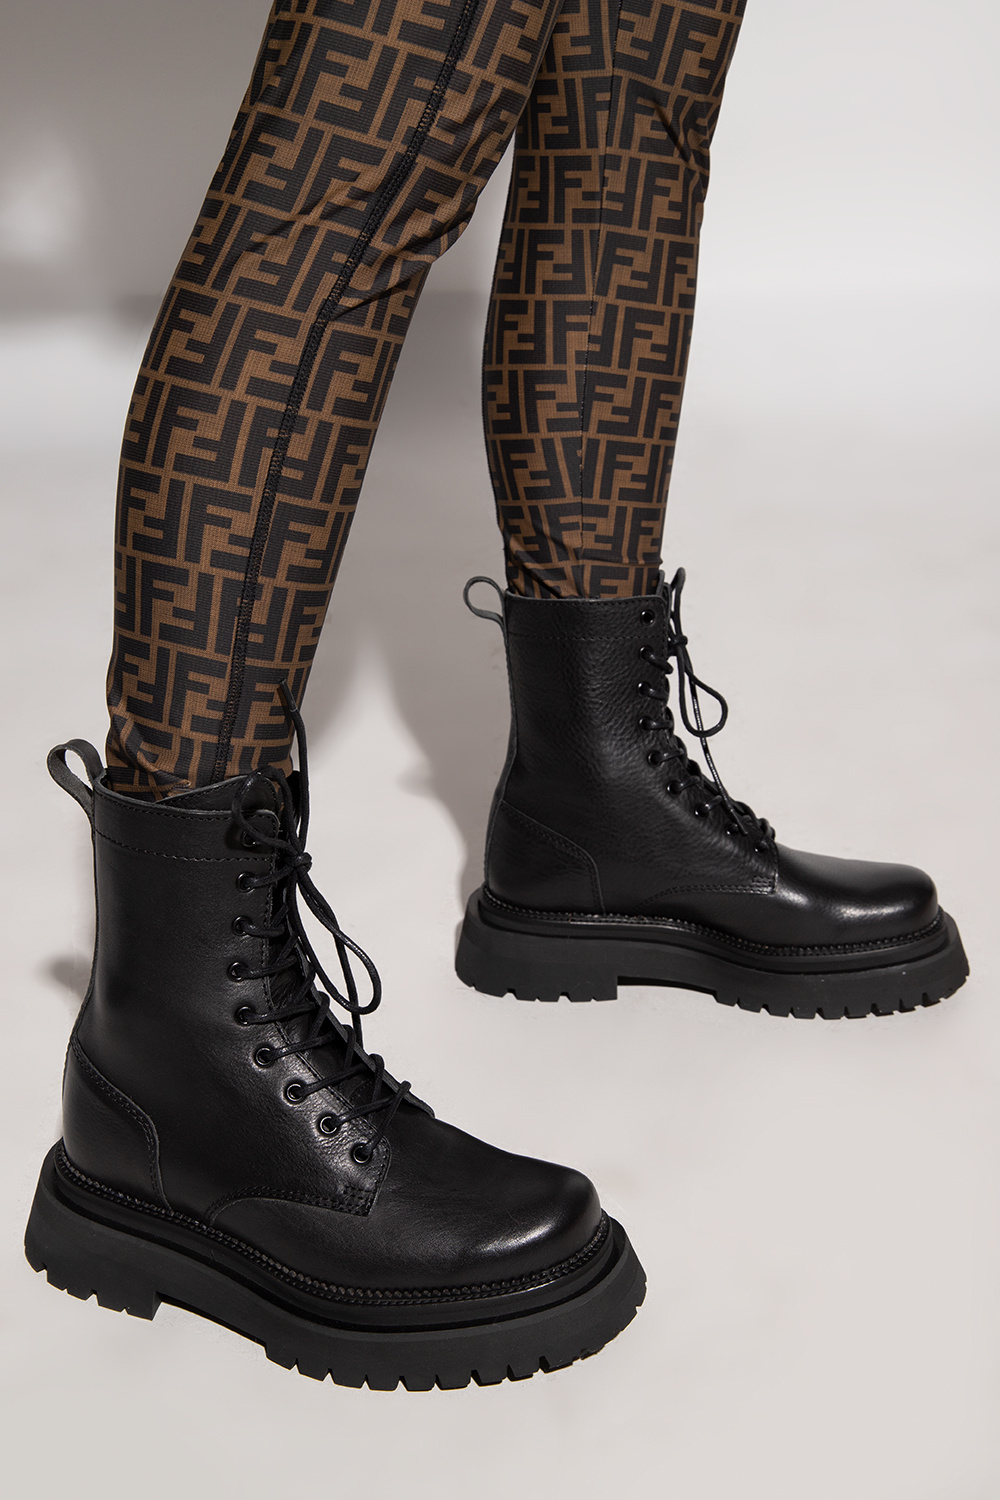 Ami Alexandre Mattiussi Leather ankle boots